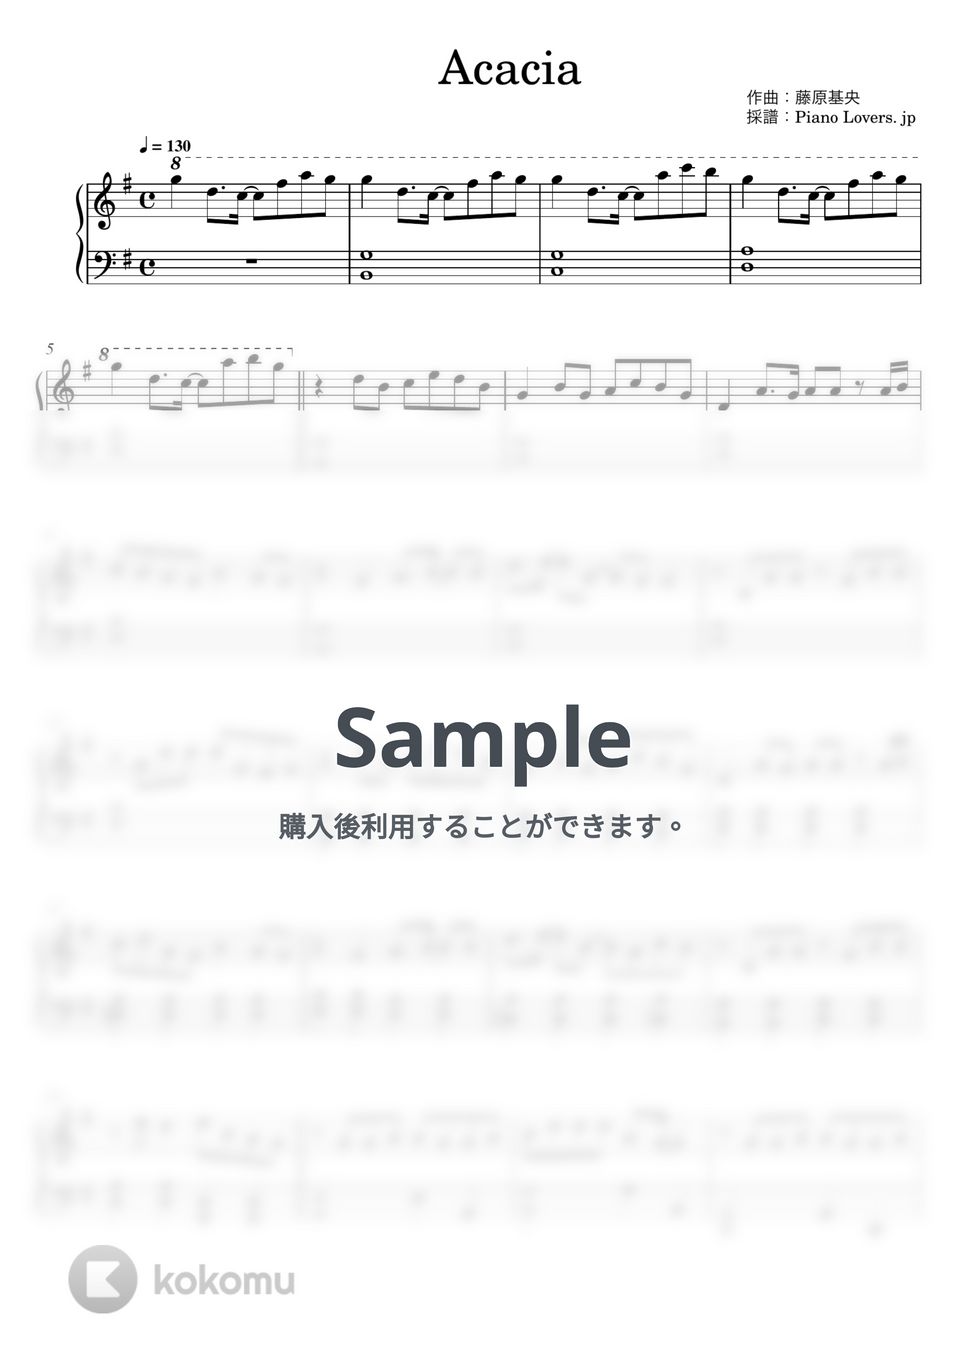 BUMP OF CHICKEN - アカシア(Acacia) (ポケモン / ピアノ初心者向け) by Piano Lovers. jp